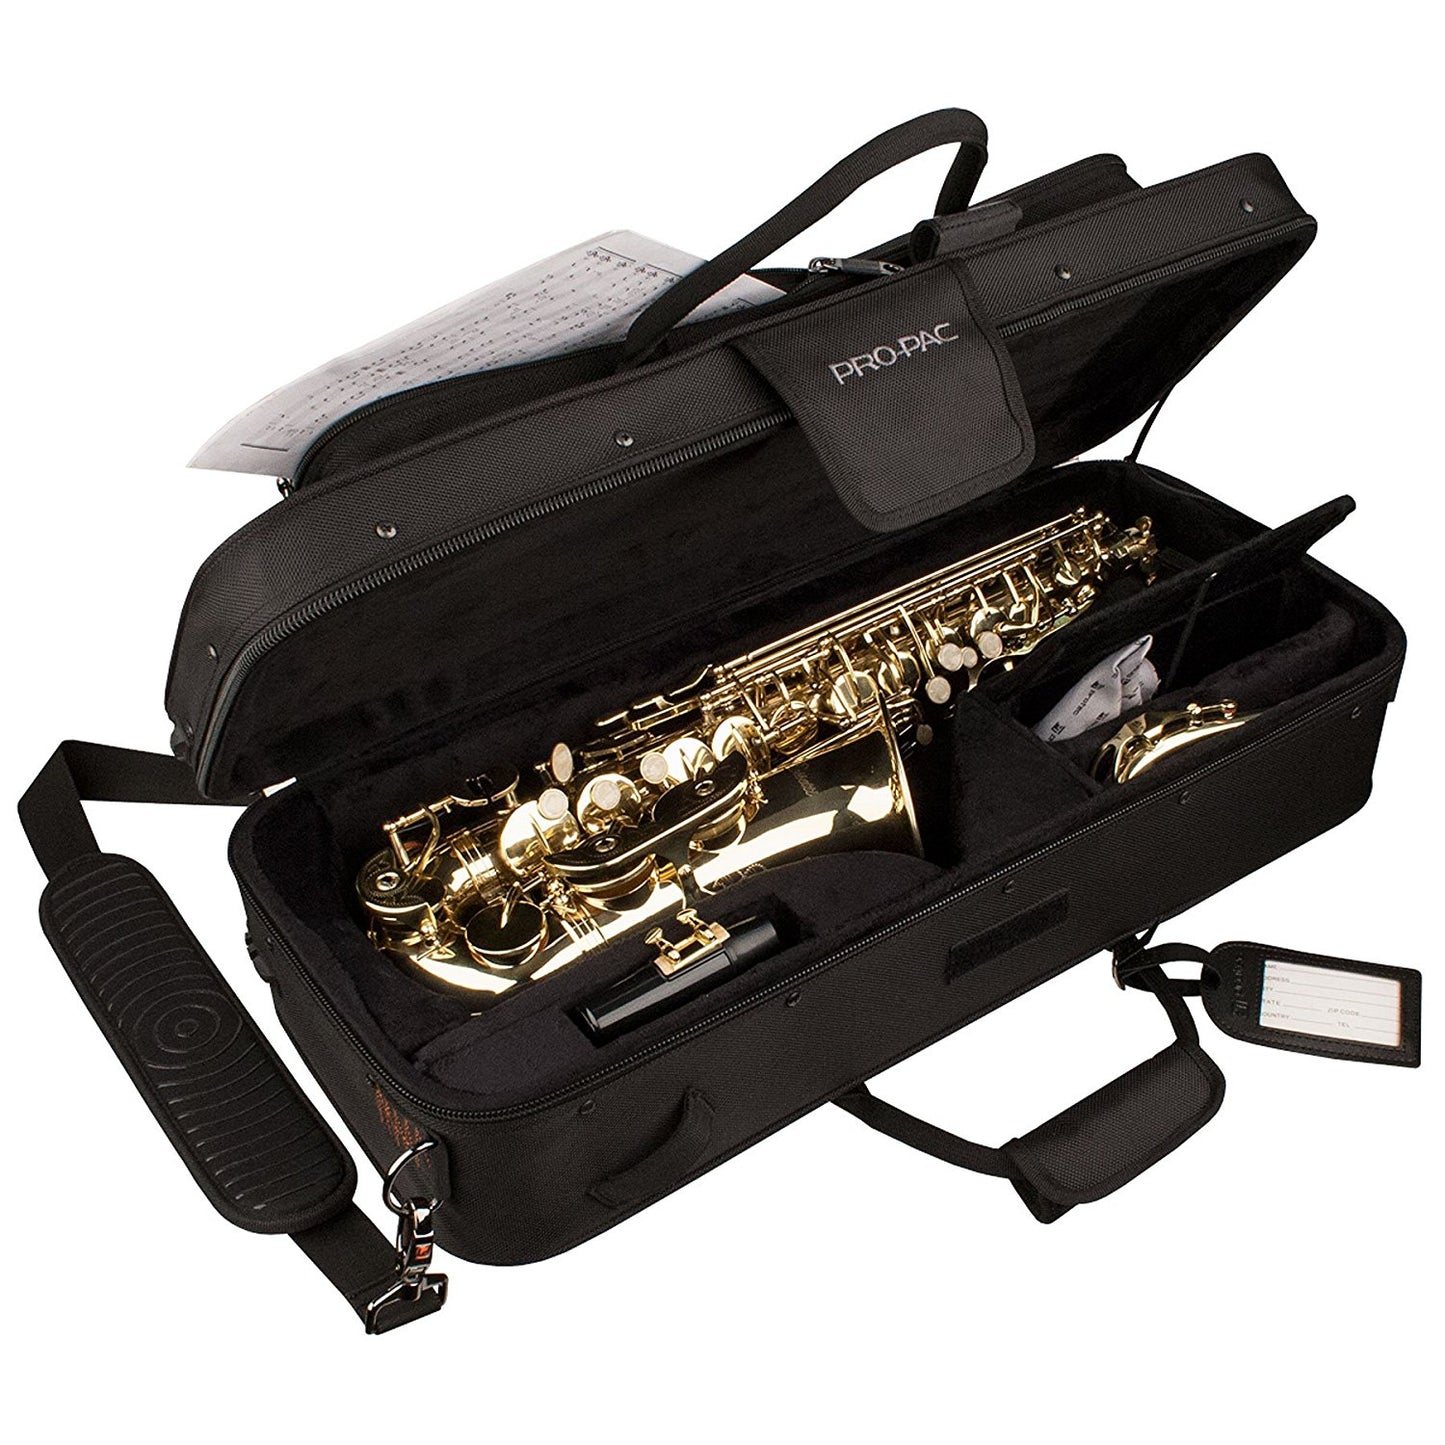 Protec PB304 Alto Saxophone PRO PAC Case - Black